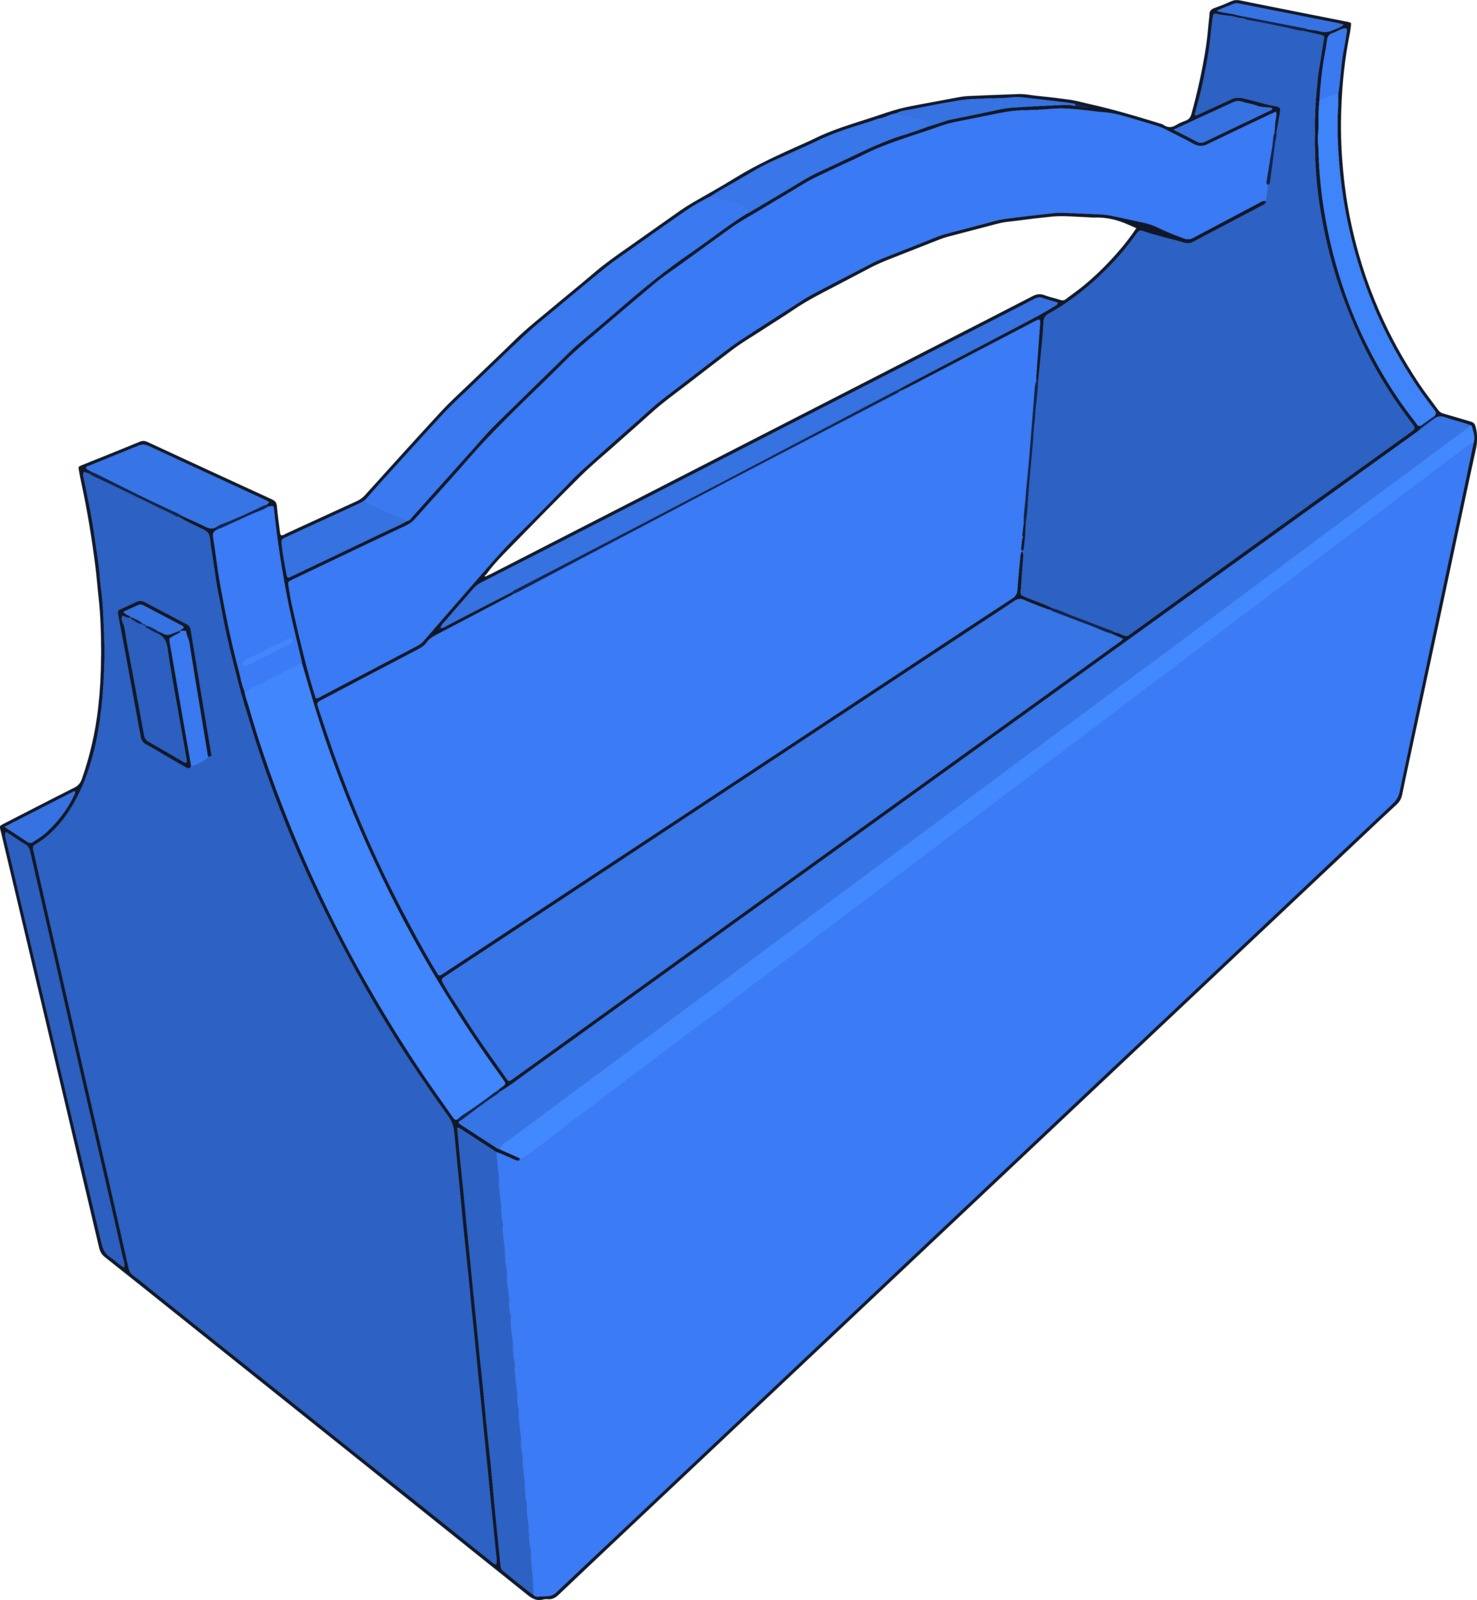 Blue tool box, illustration, vector on white background. by Morphart